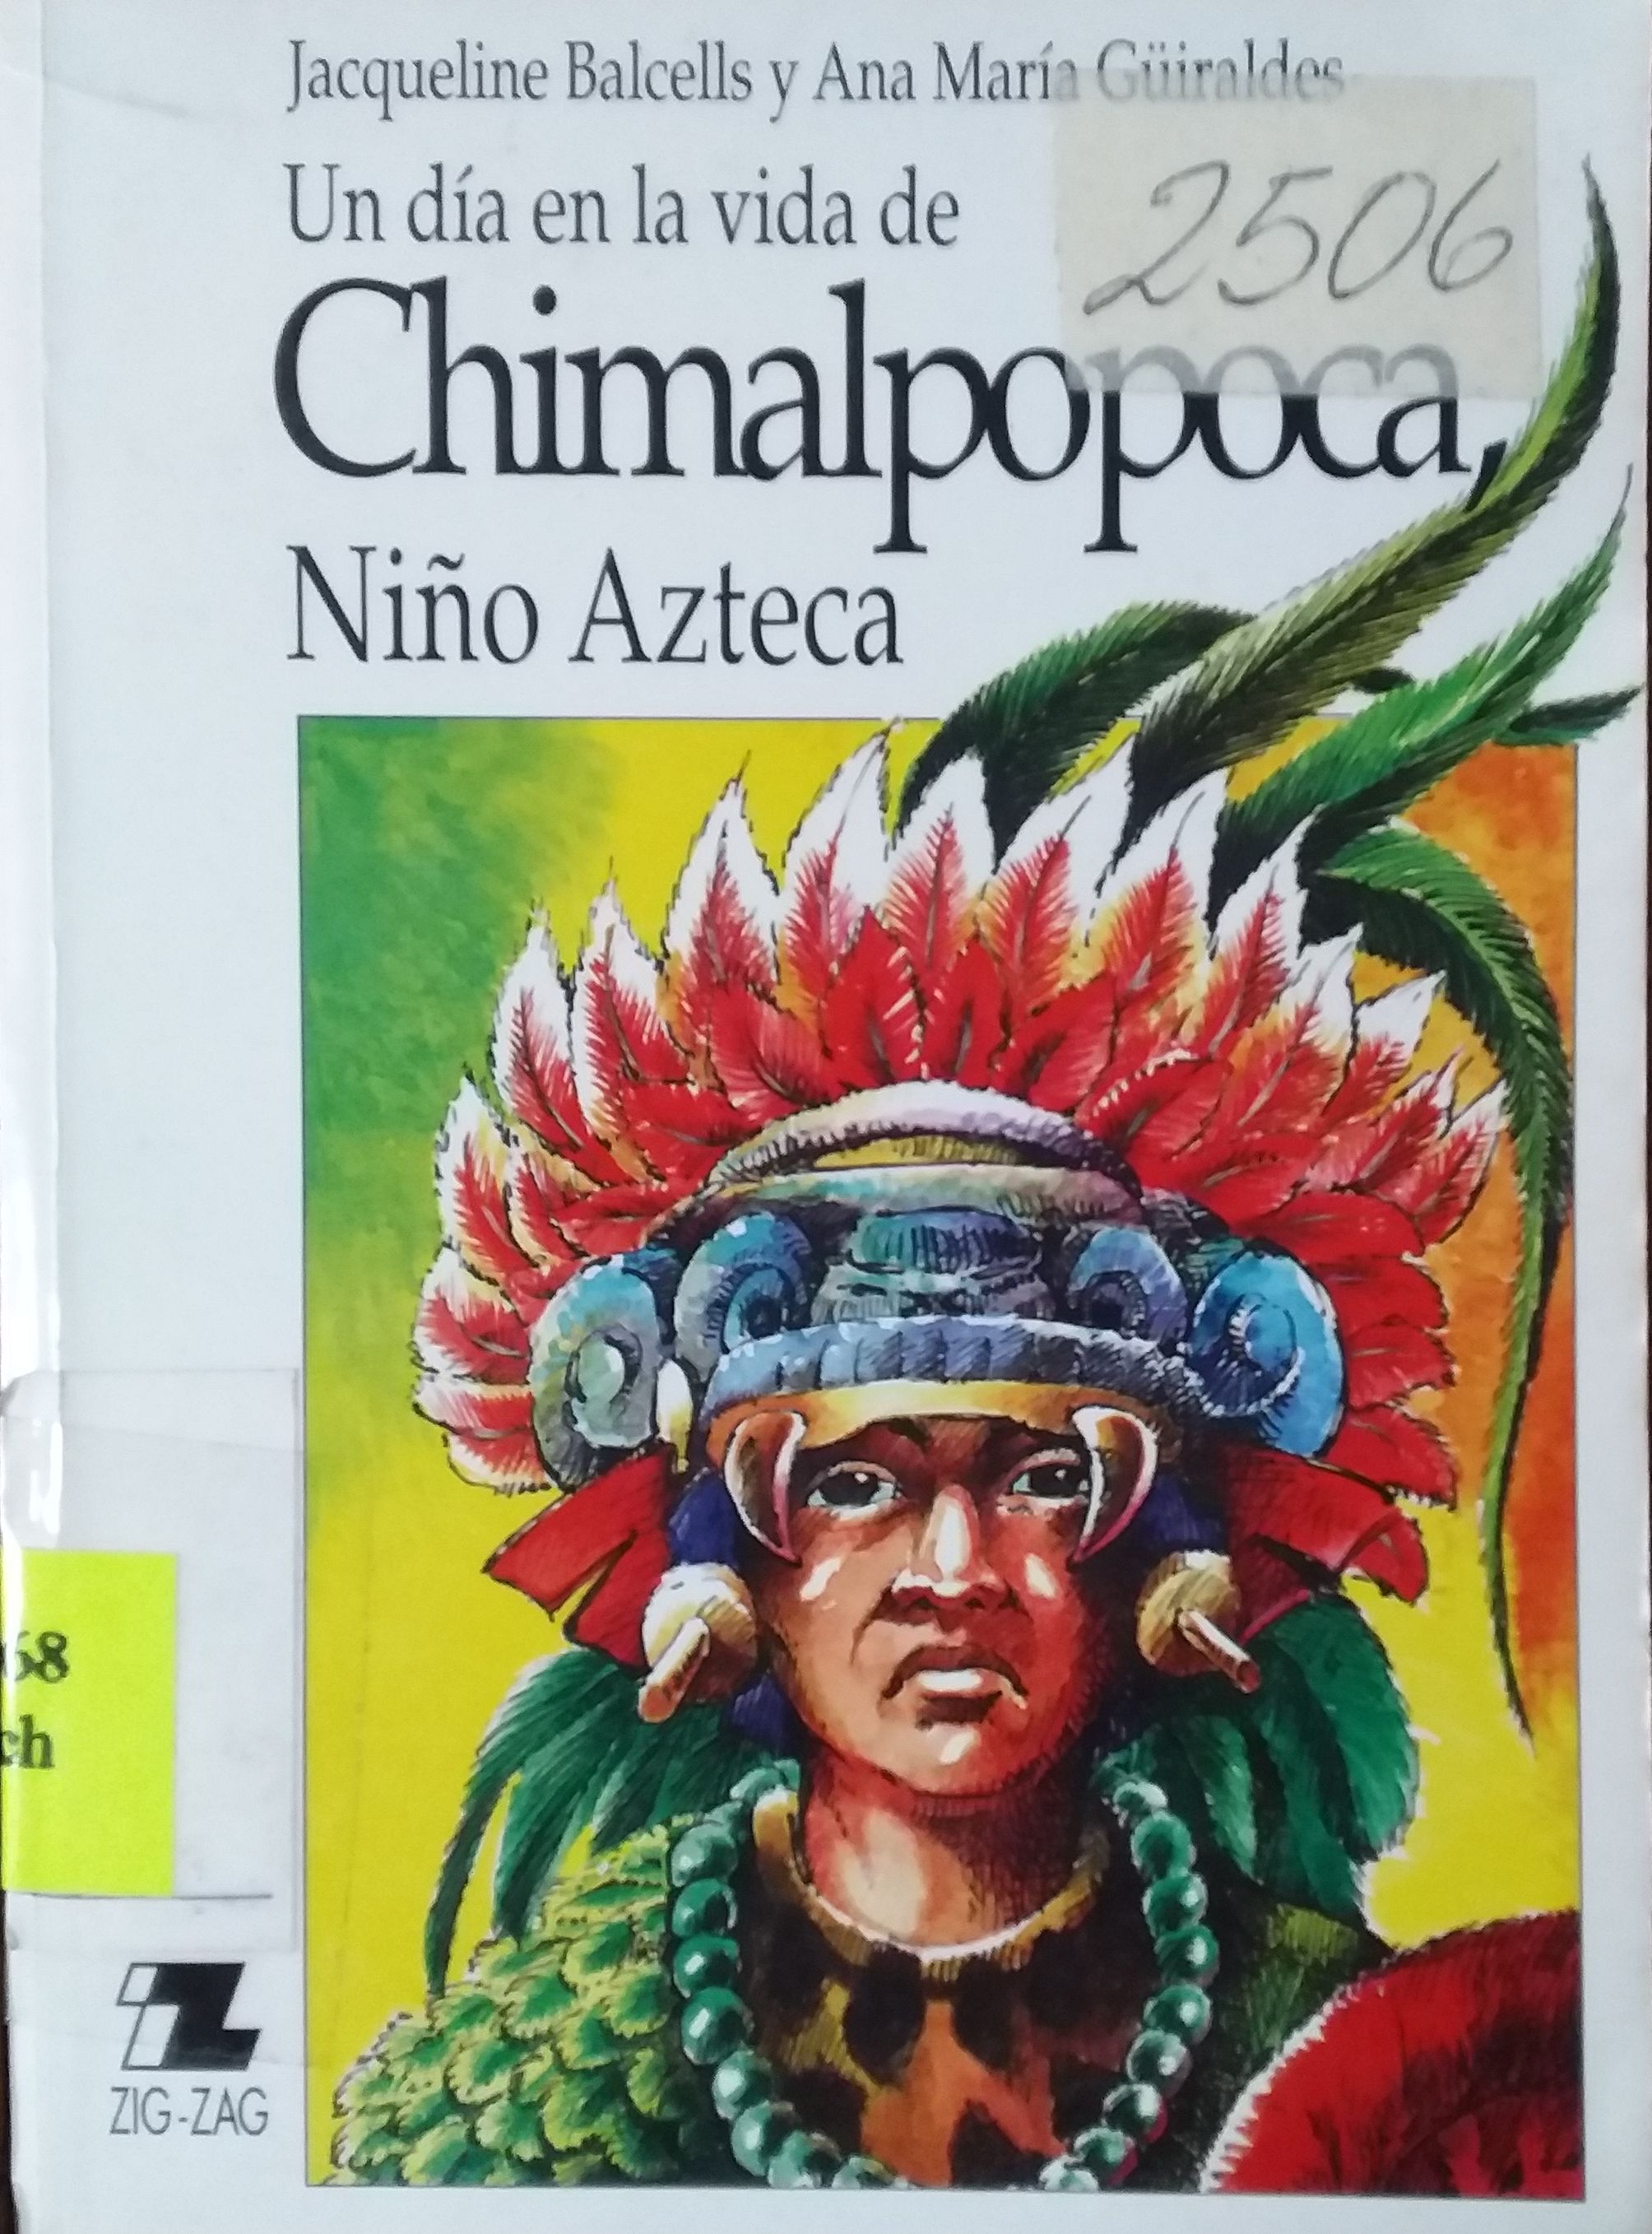 Chimalpopocan Niño Azteca